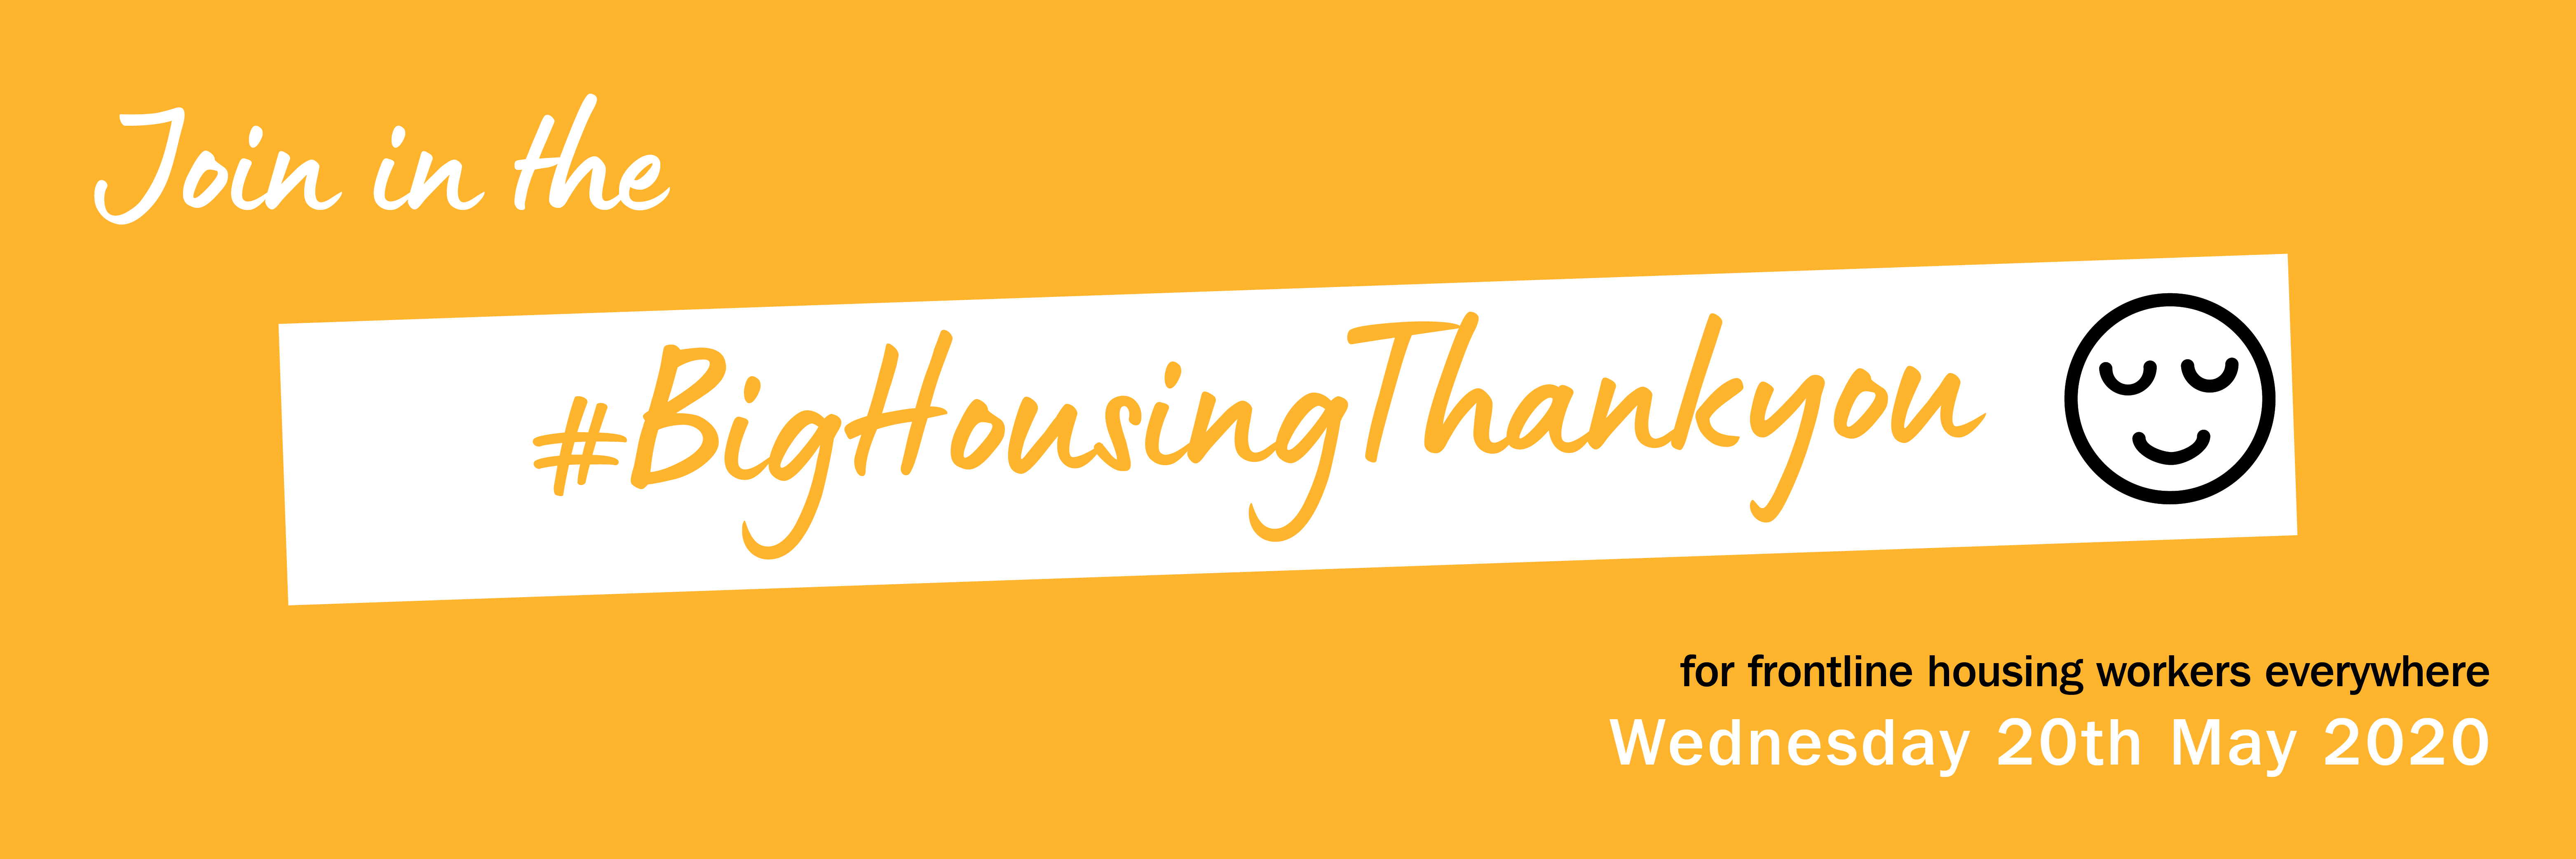 Big housing thank you Twitter banner - light orange